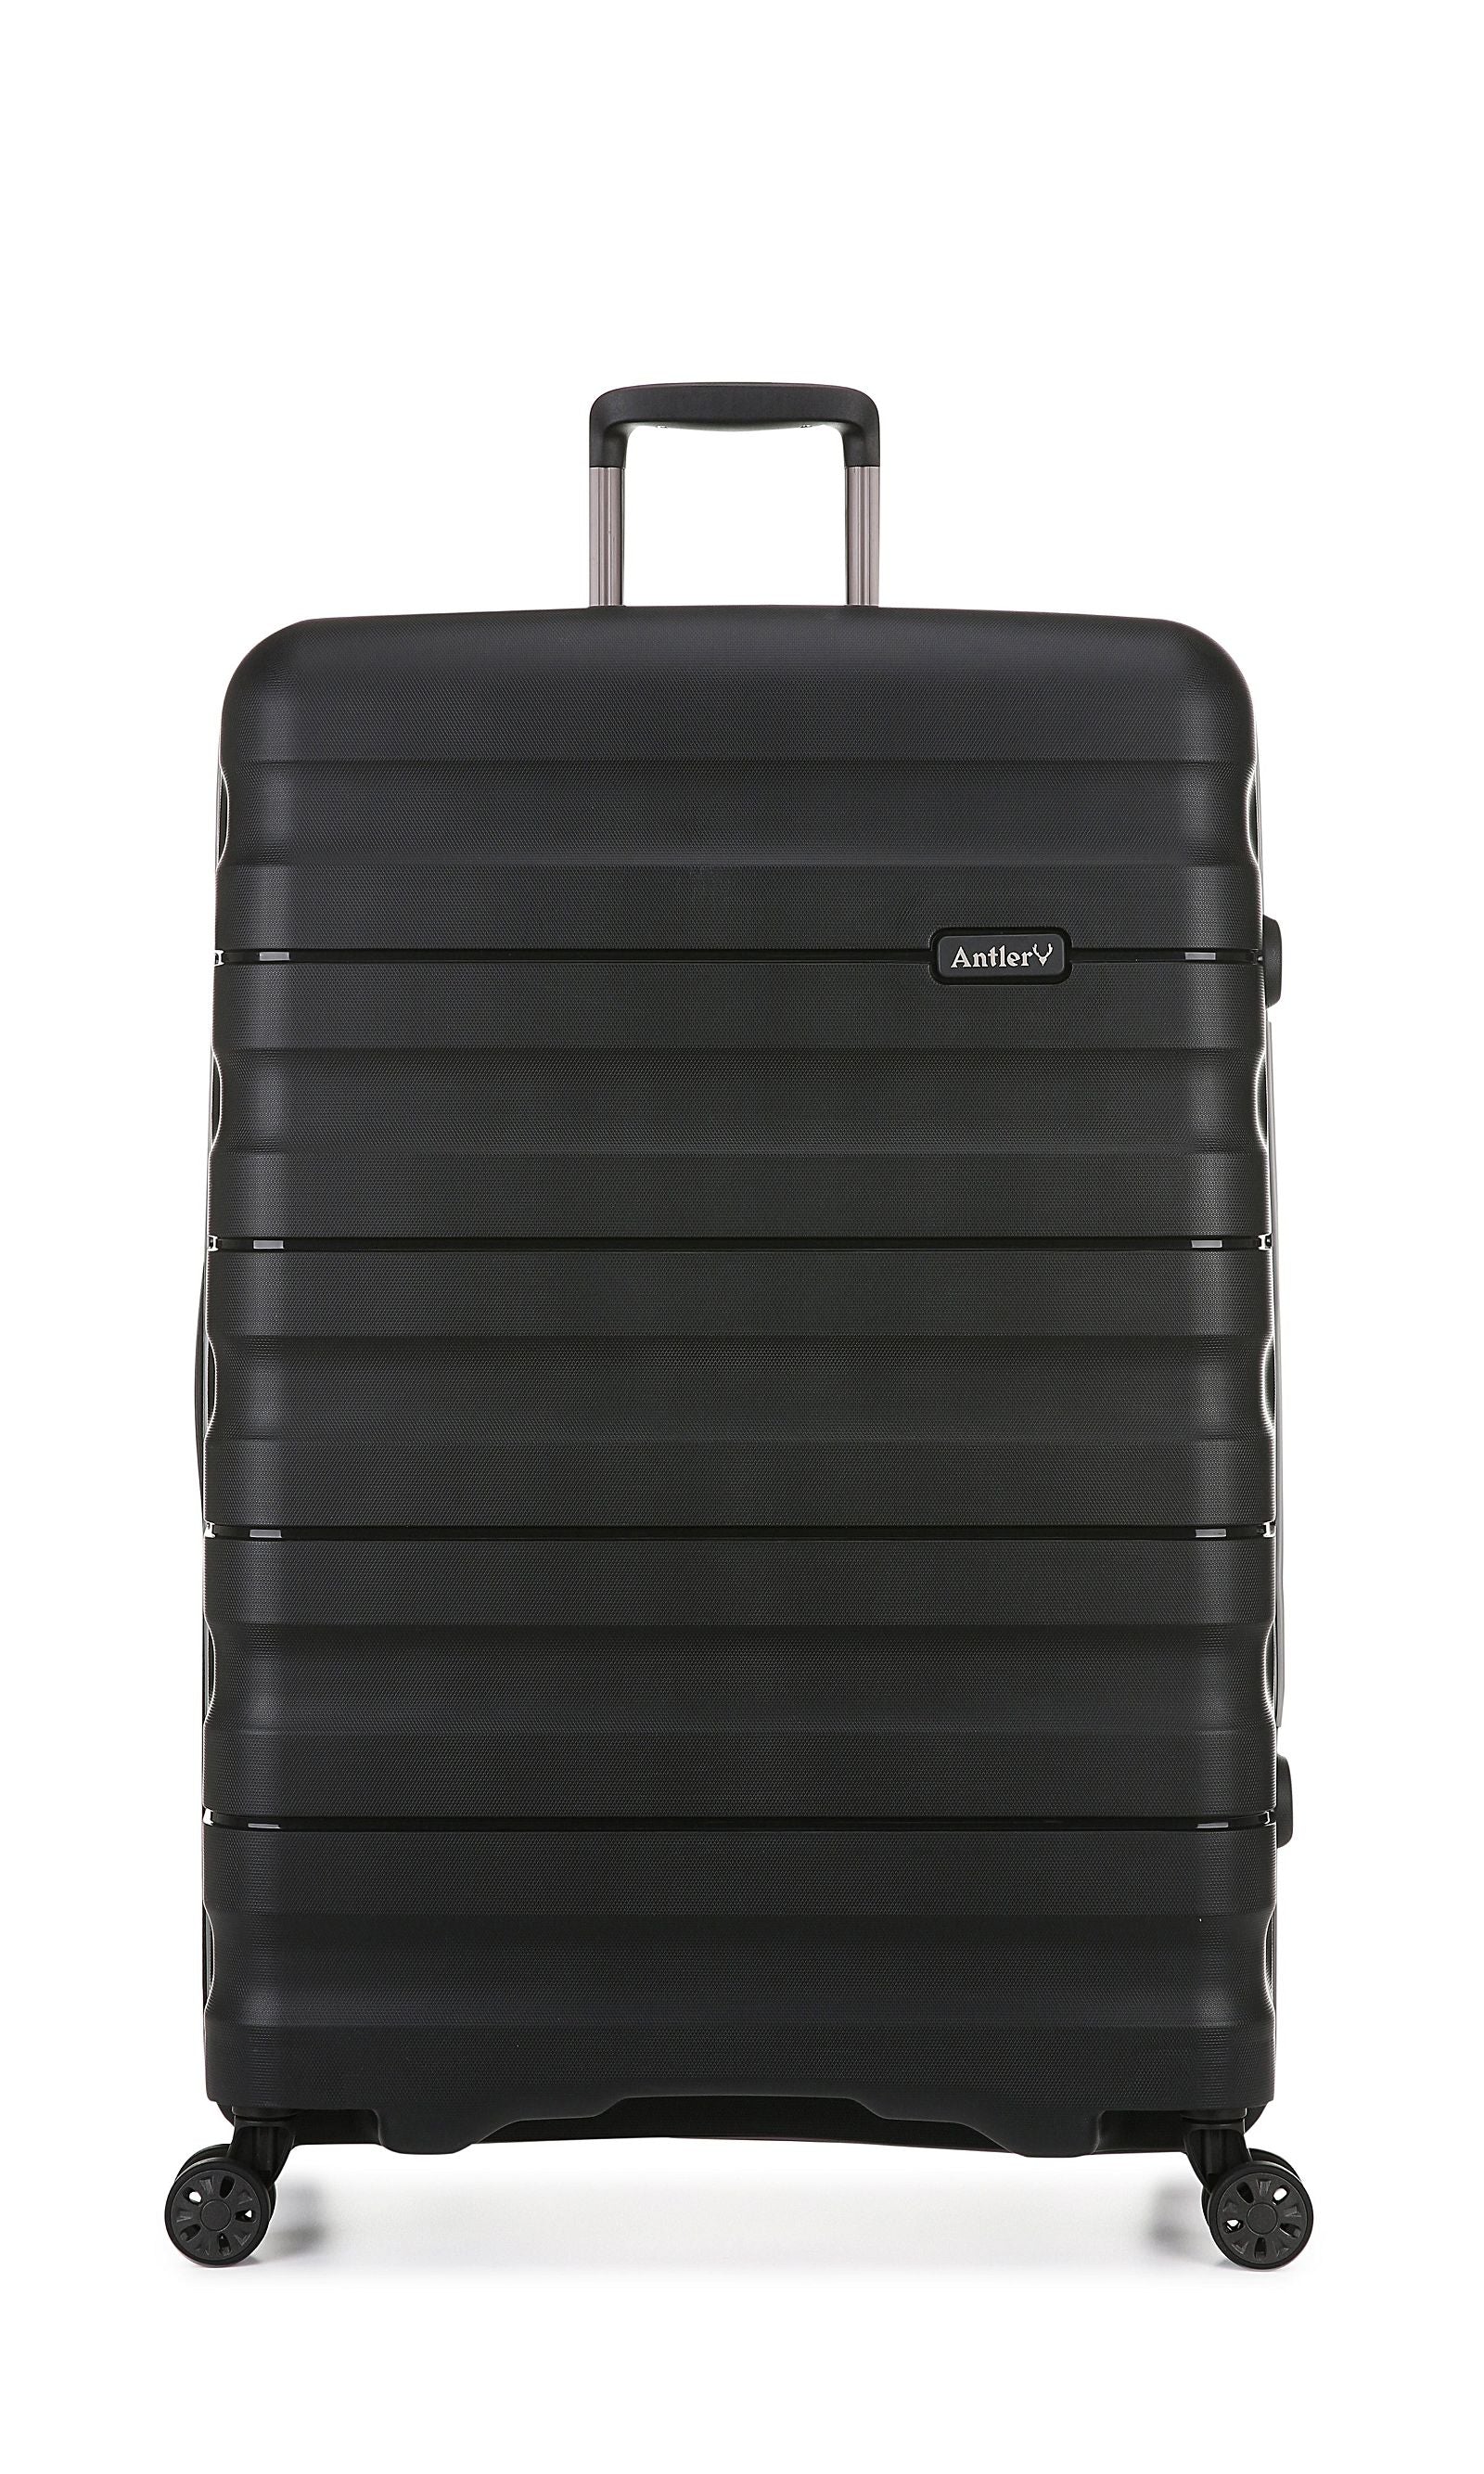 Antler - Lincoln Medium 68cm Hardside 4 Wheel Suitcase - Black - rainbowbags